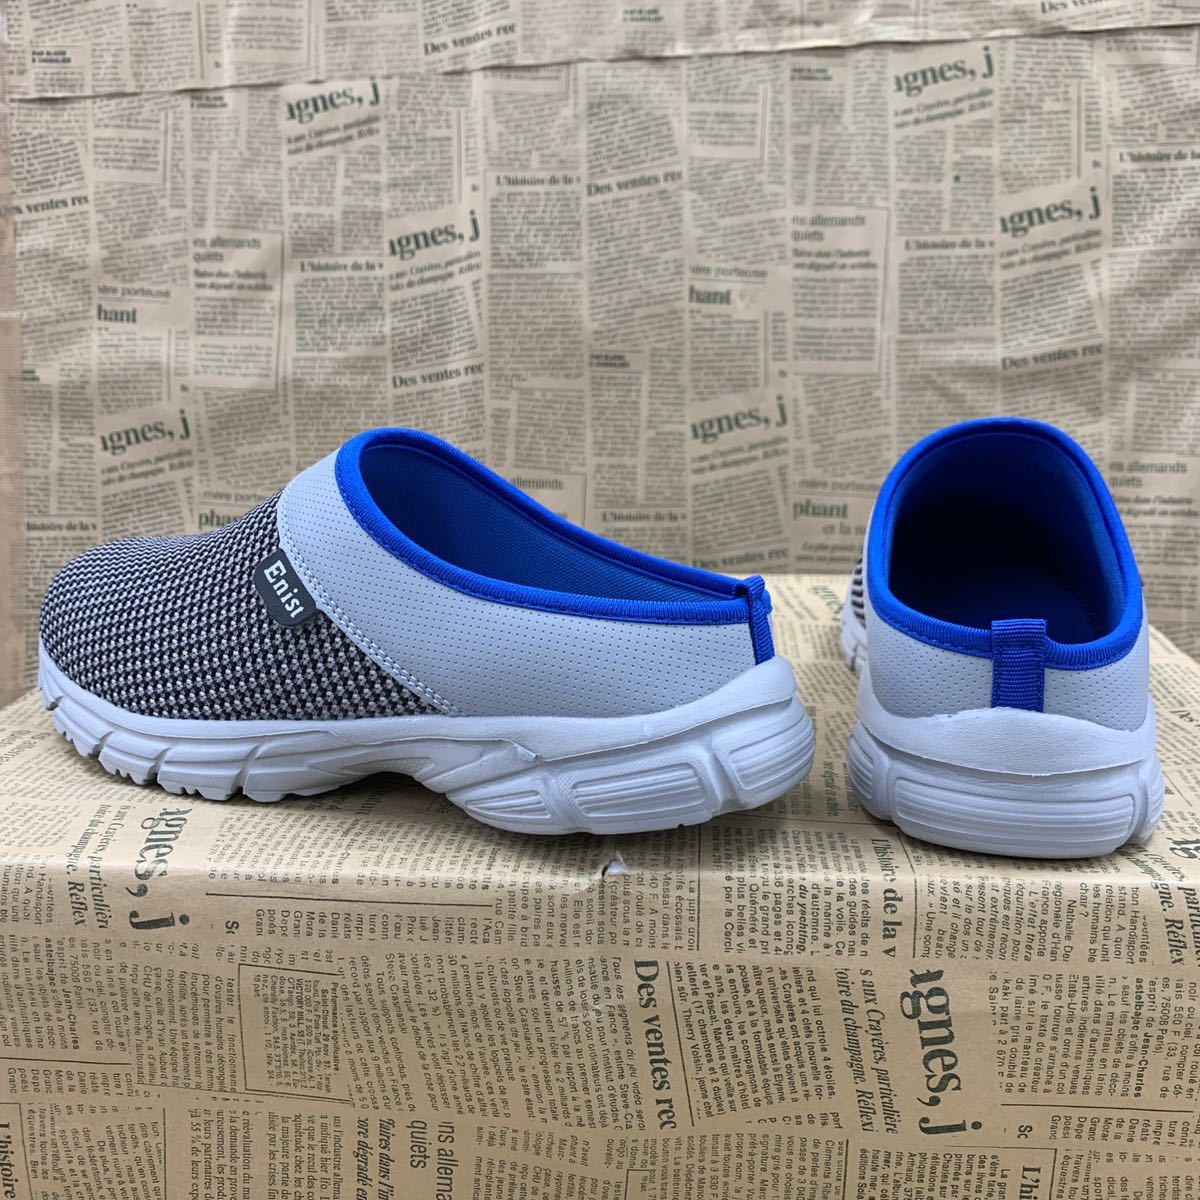  new goods men's S size 24.0-24.5cm light weight sabot sandals sport sandals sabot sneakers clog sandals clog shoes gray osw1269